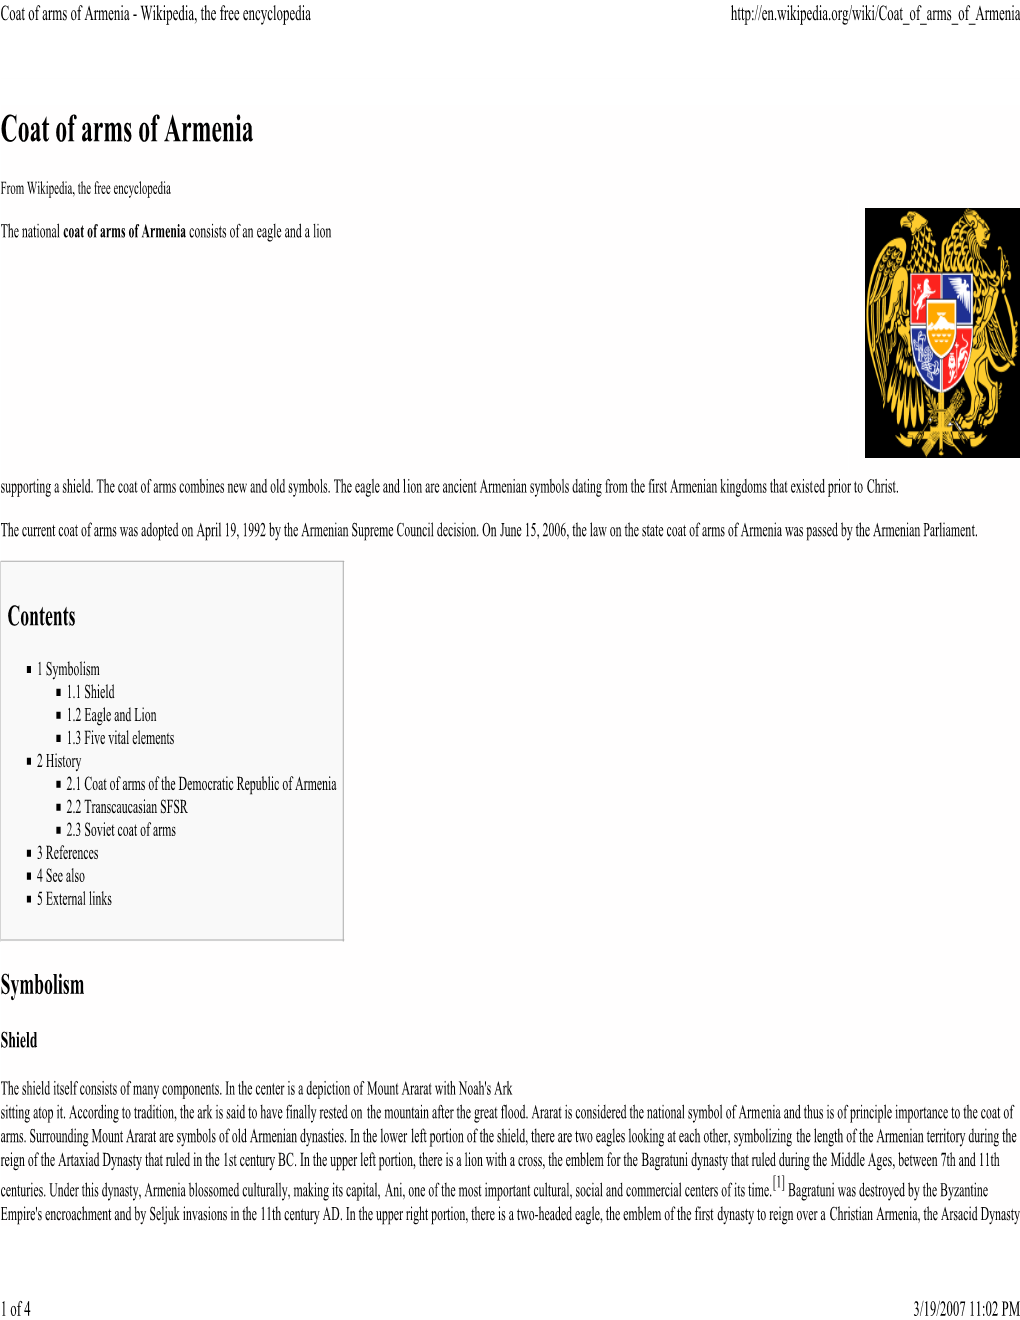 Coat of Arms of Armenia - Wikipedia, the Free Encyclopedia